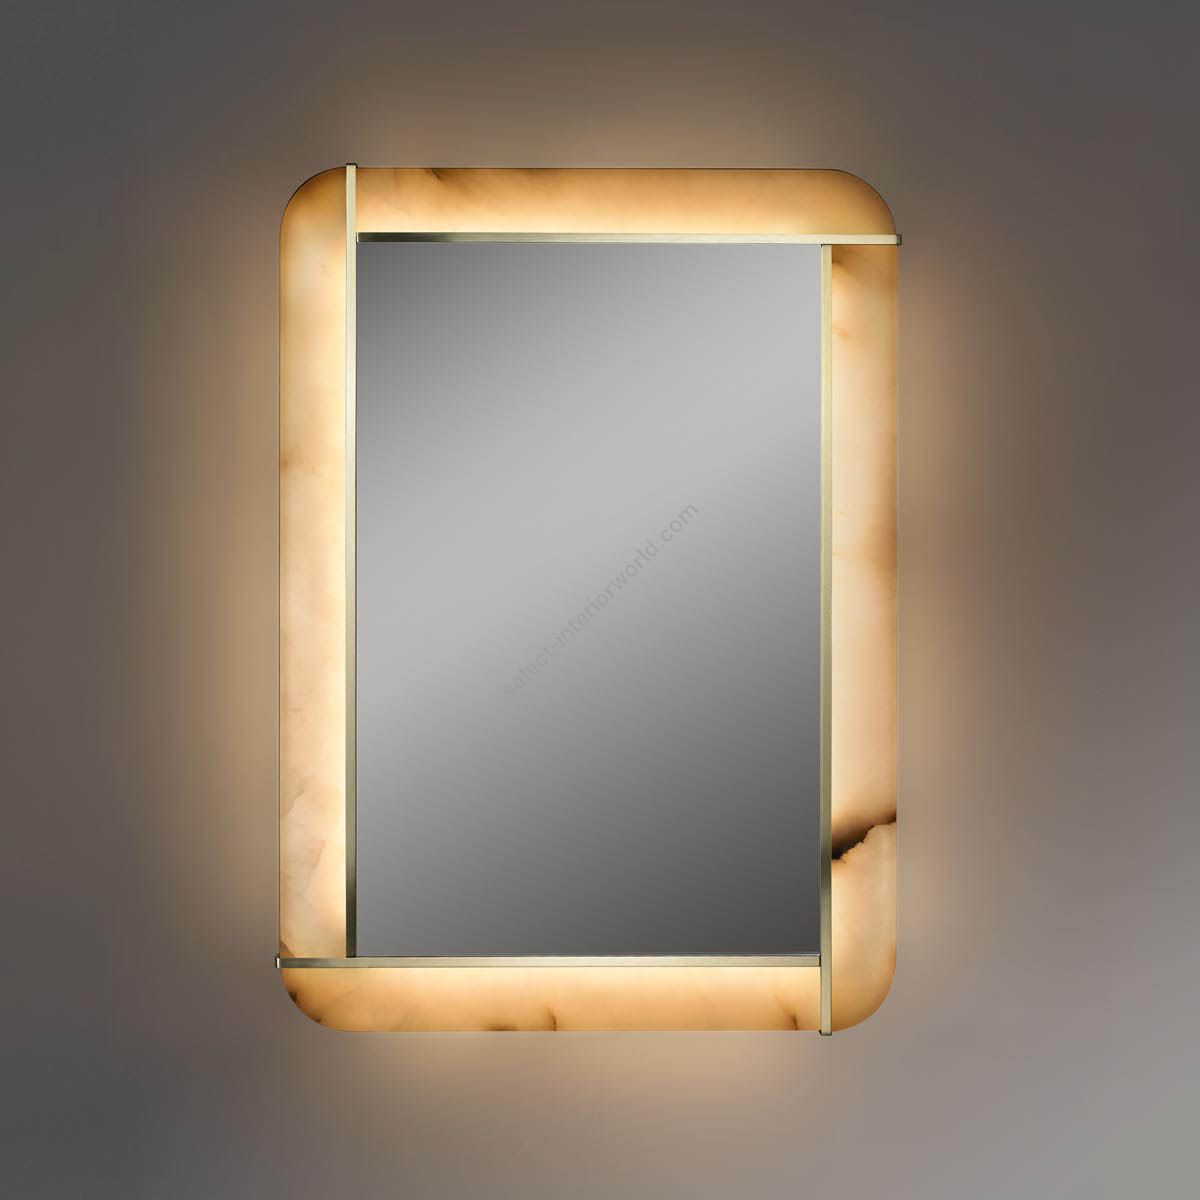 Volterra Illuminated LED Mirror by Boyd Lighting